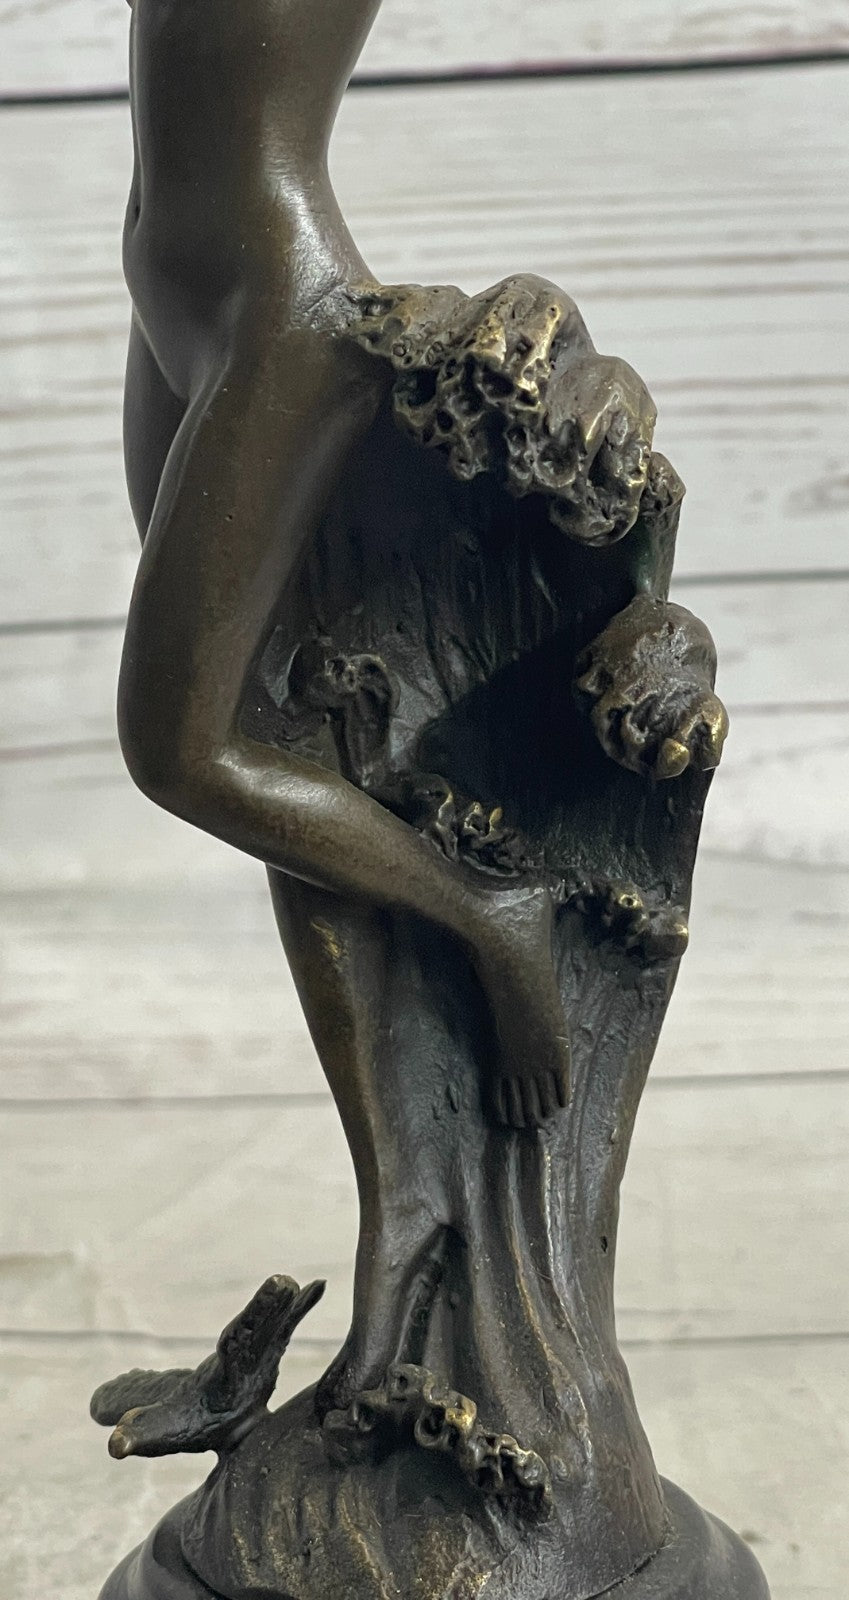 Bronze Sculpture Statue Figure Nude Sexy Girl Erotic Hot Cast Artwork Museum Art